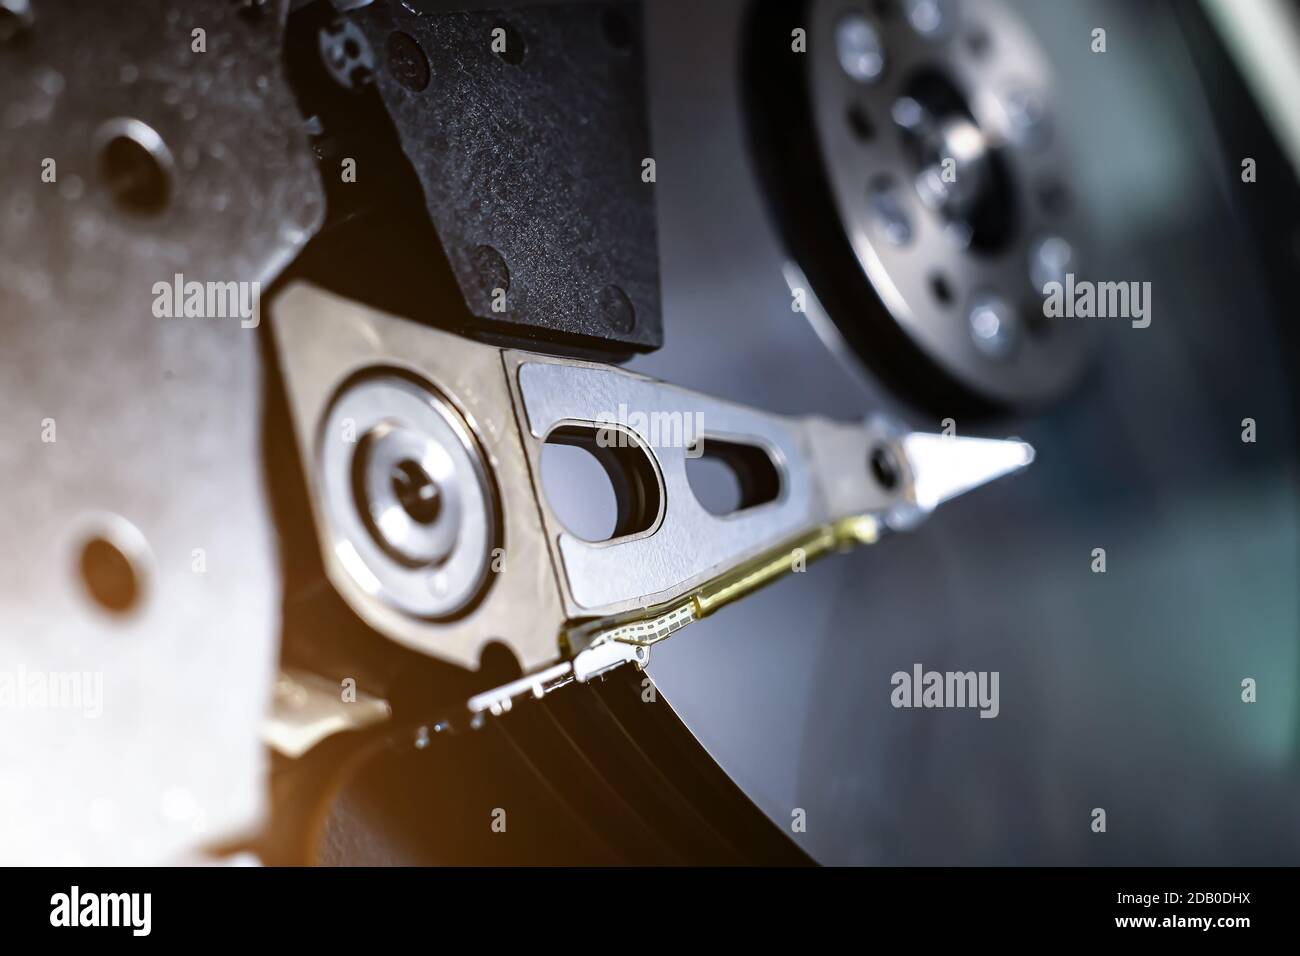 hard drive mechanism close up macro photo. Stock Photo